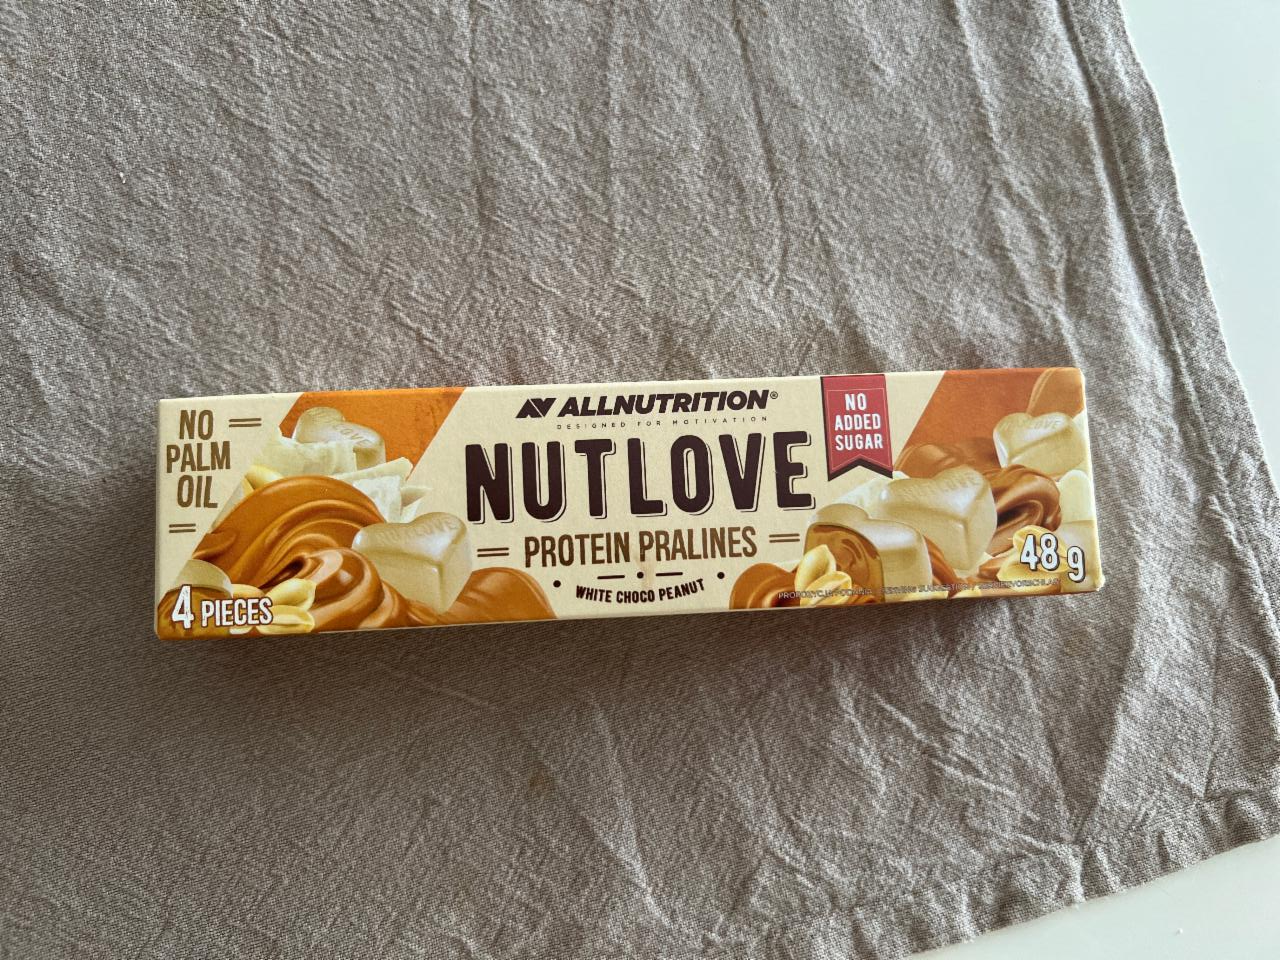 Фото - Nutlove protein pralines white choco peanut Allnutrition